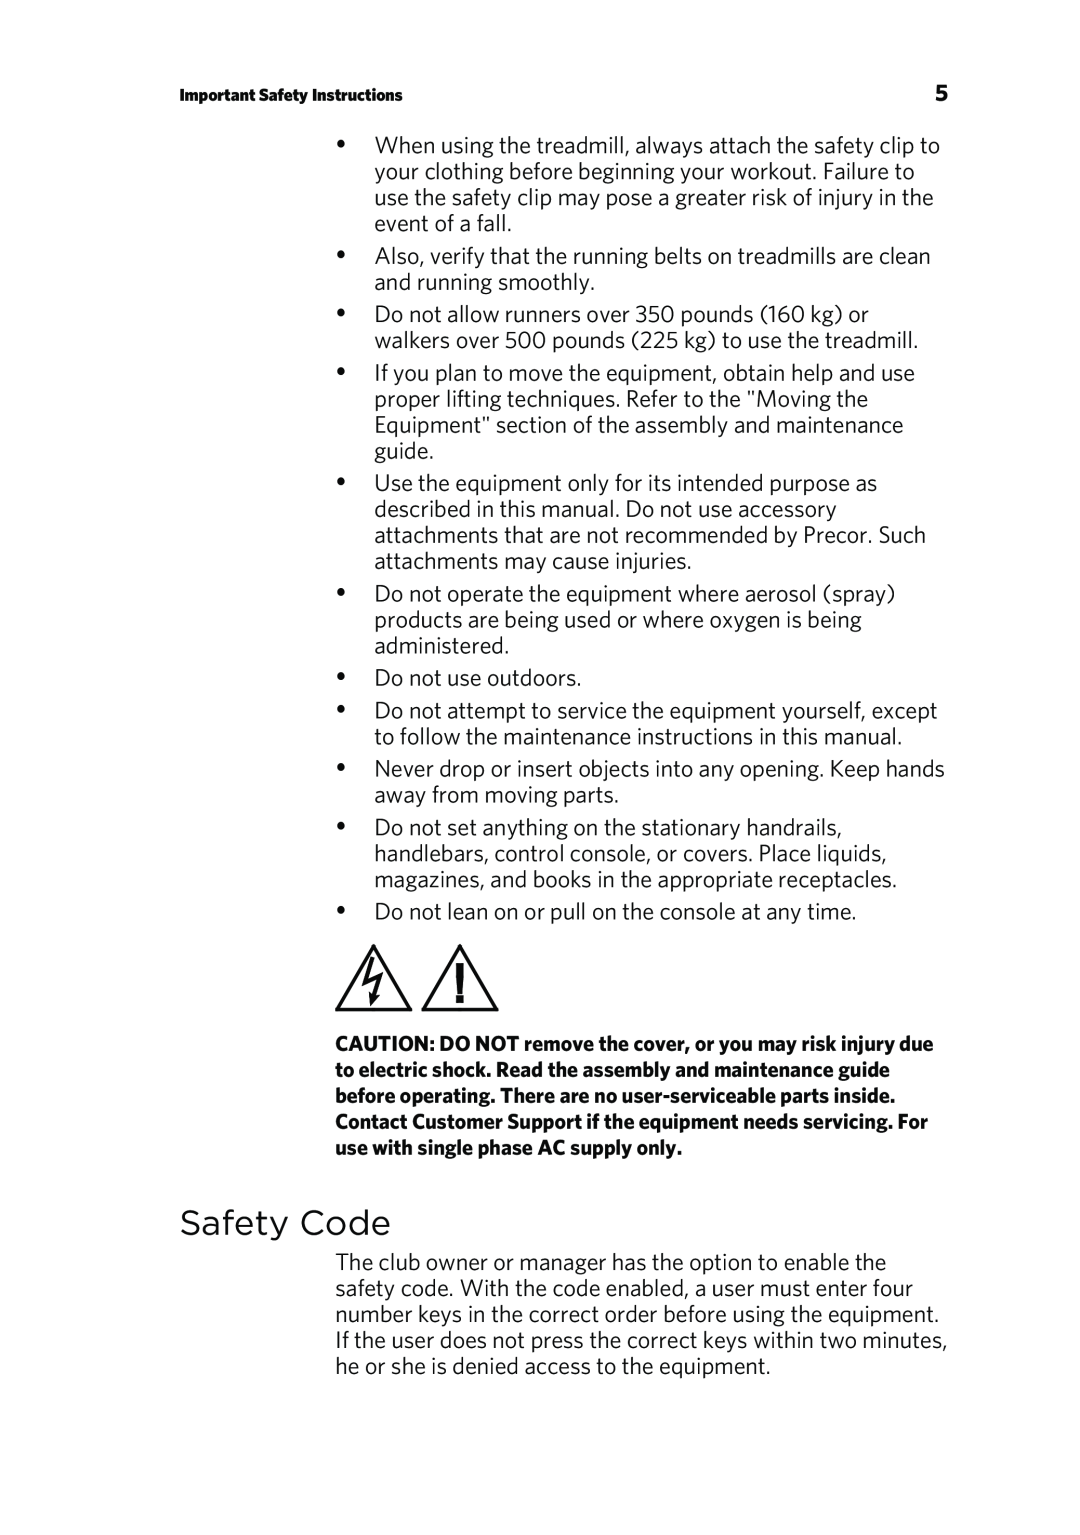 Precor P80 manual Safety Code 